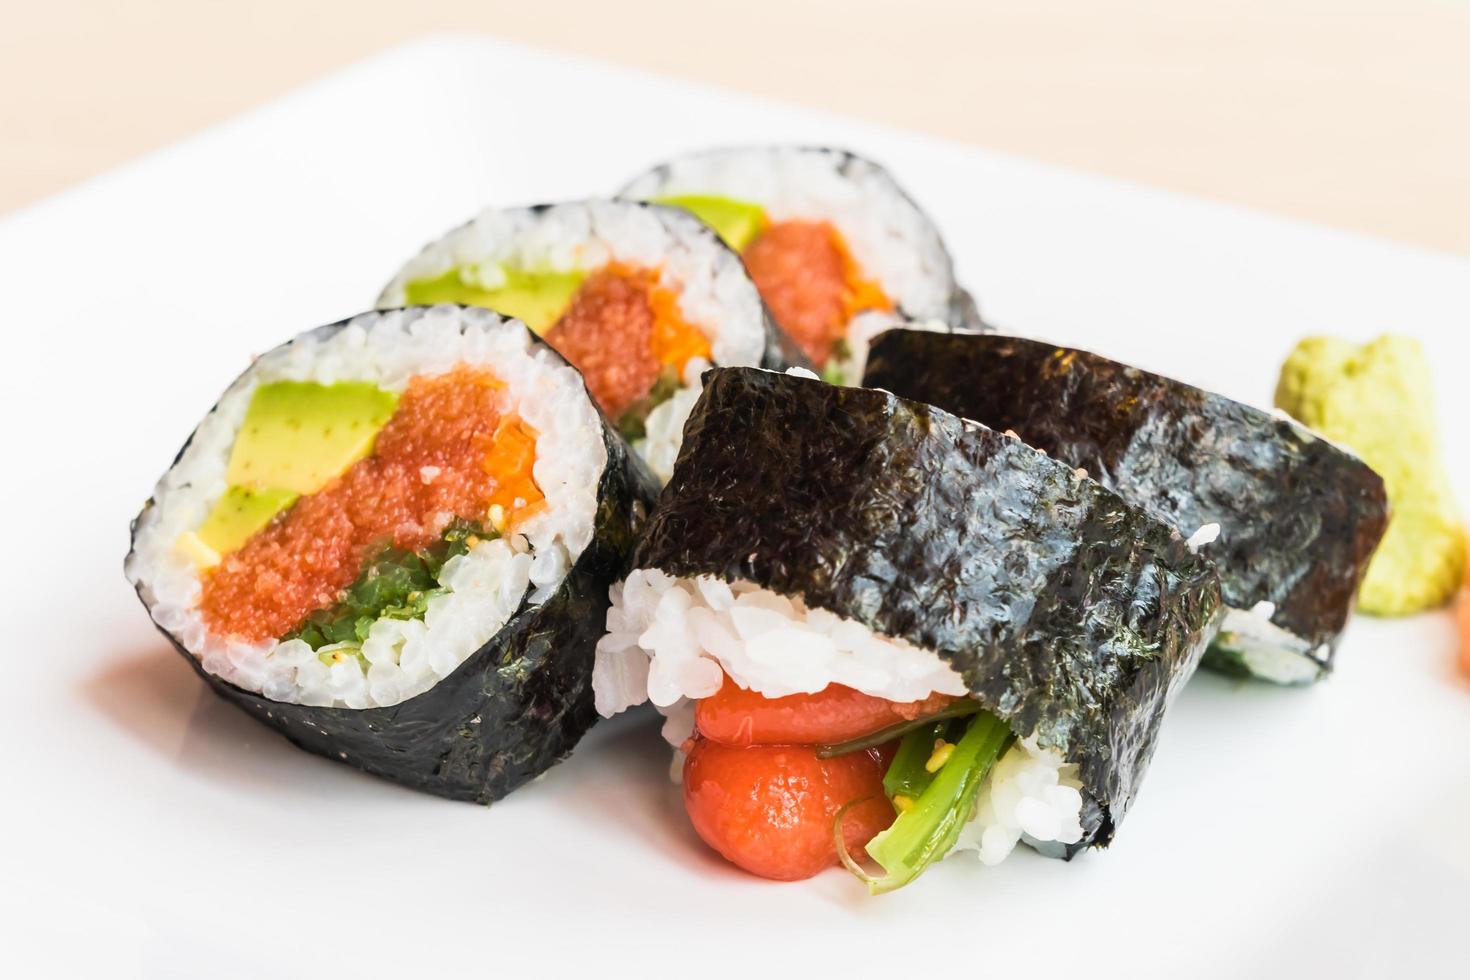 sushi in witte plaat foto